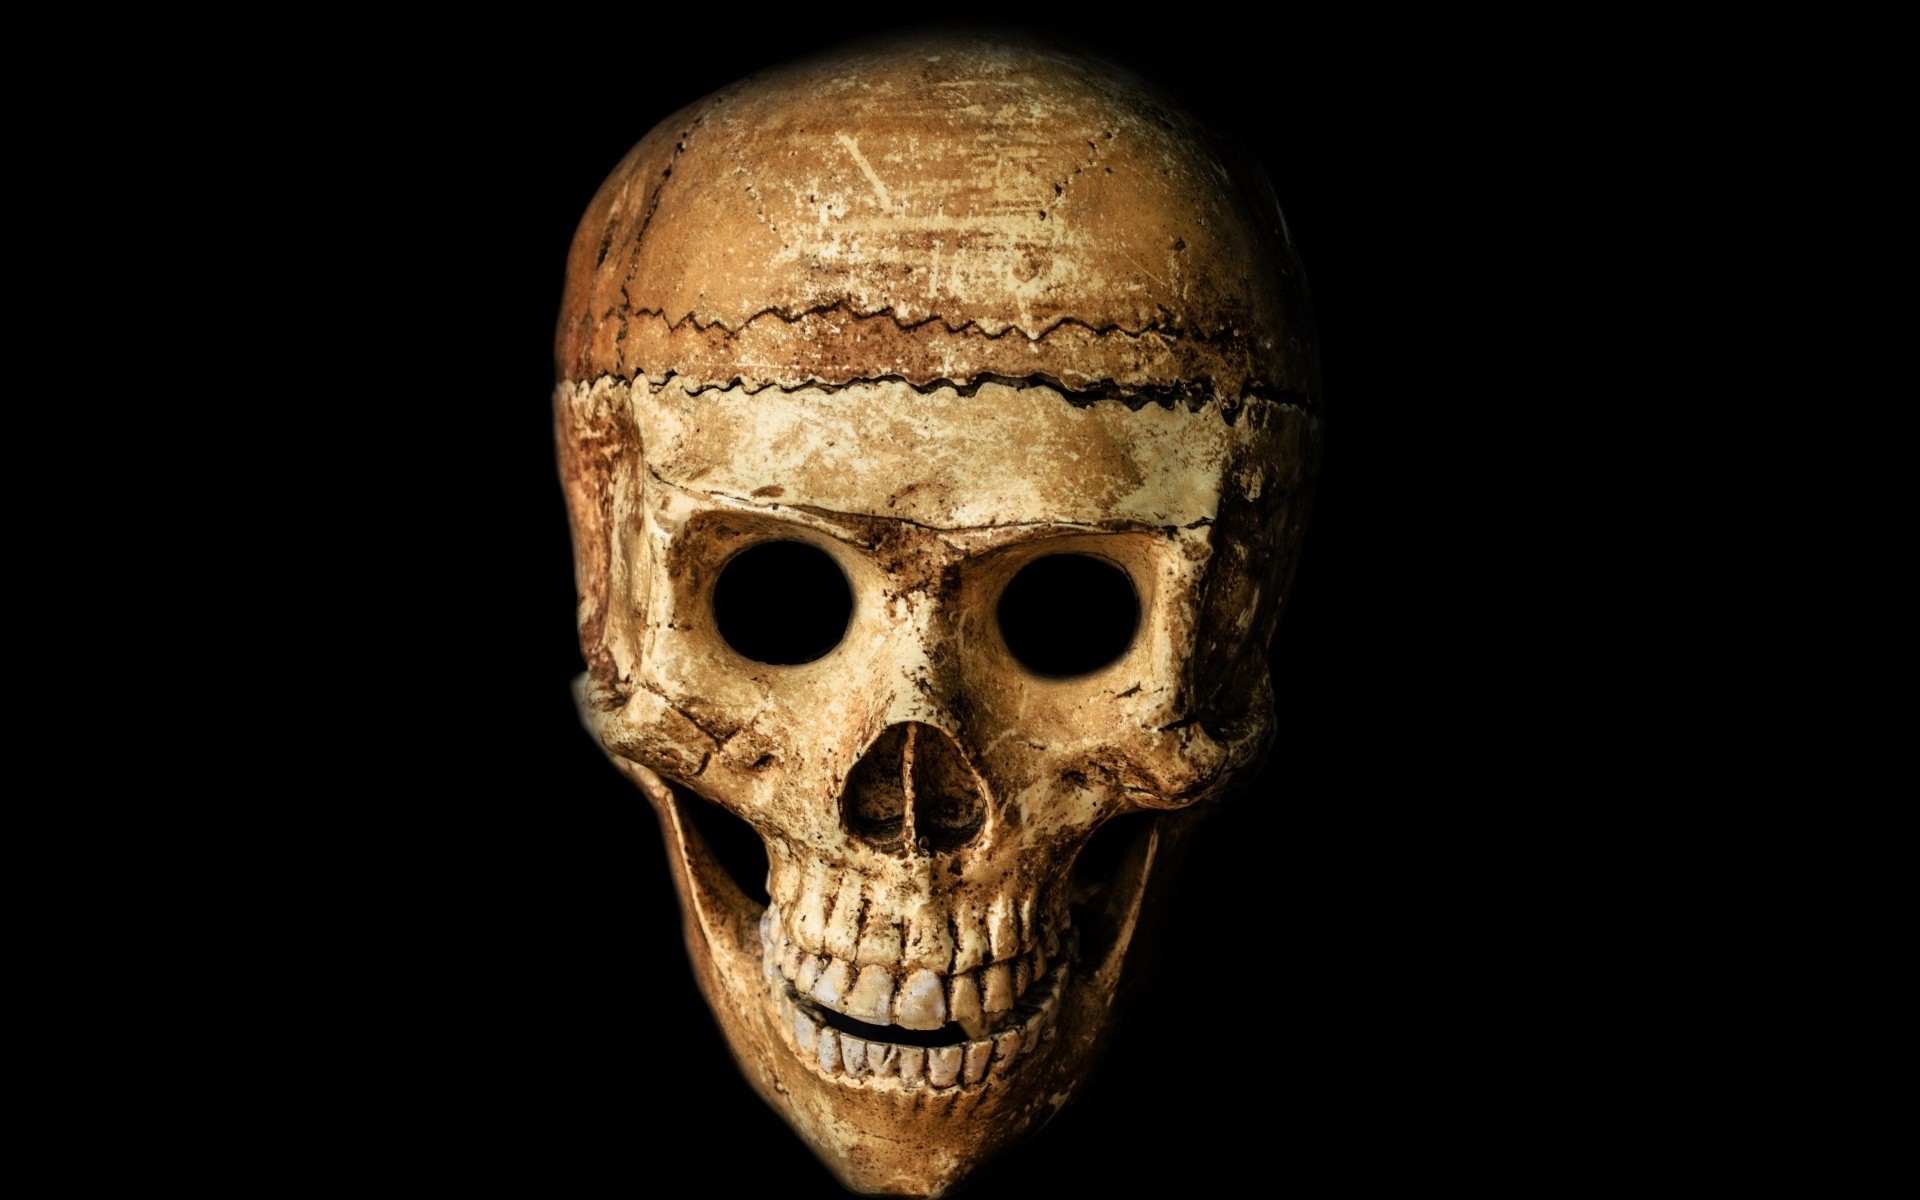 General 1920x1200 skull bones simple background black background